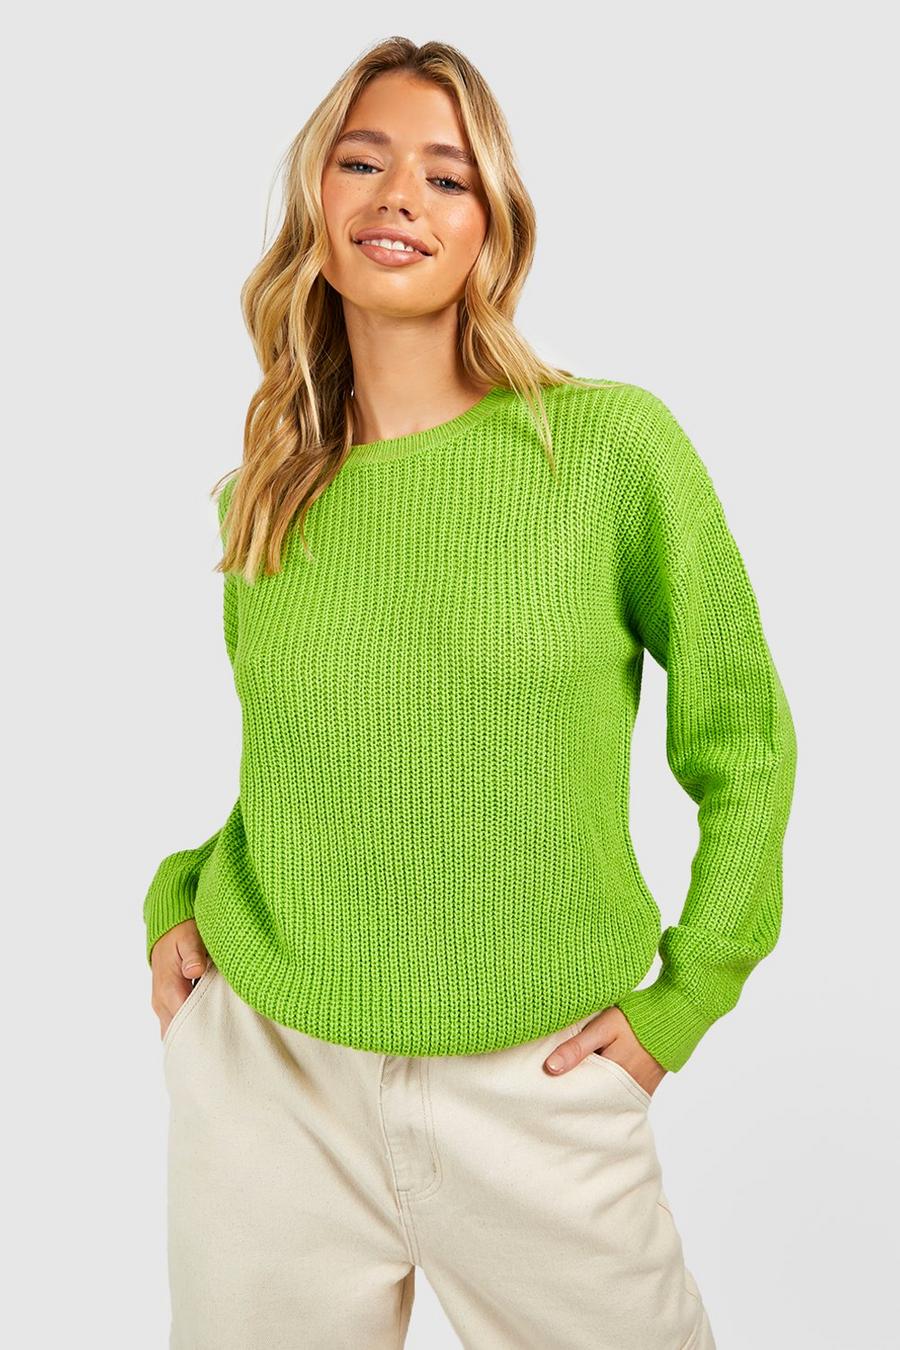 Apple green סוודר קרופ עם צווארון מעוגל